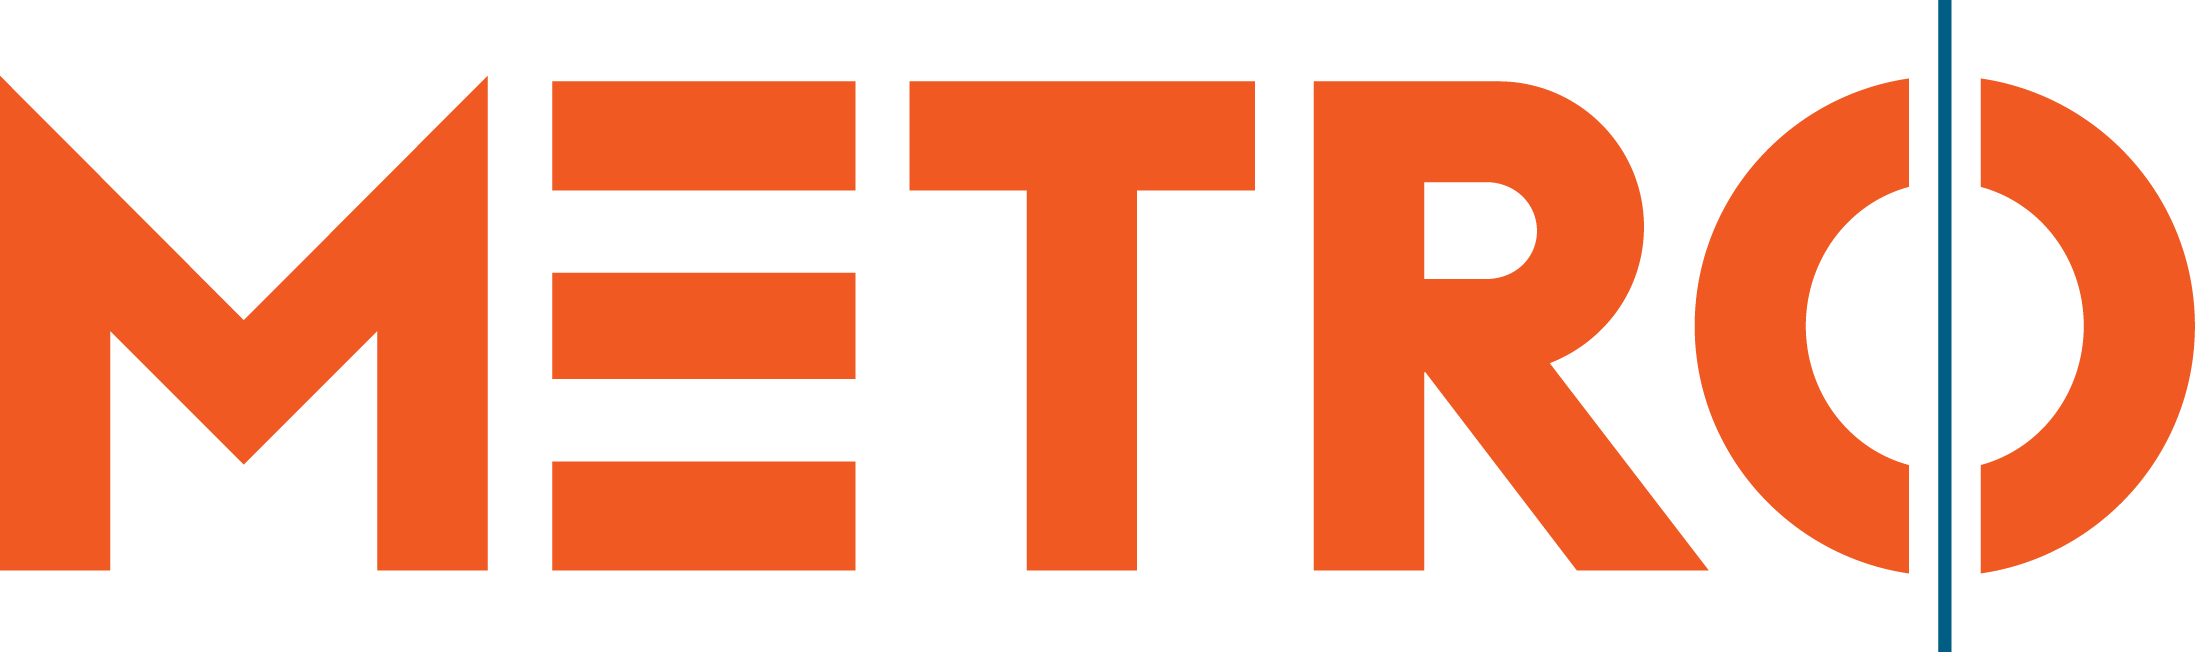 METRO - Program TV